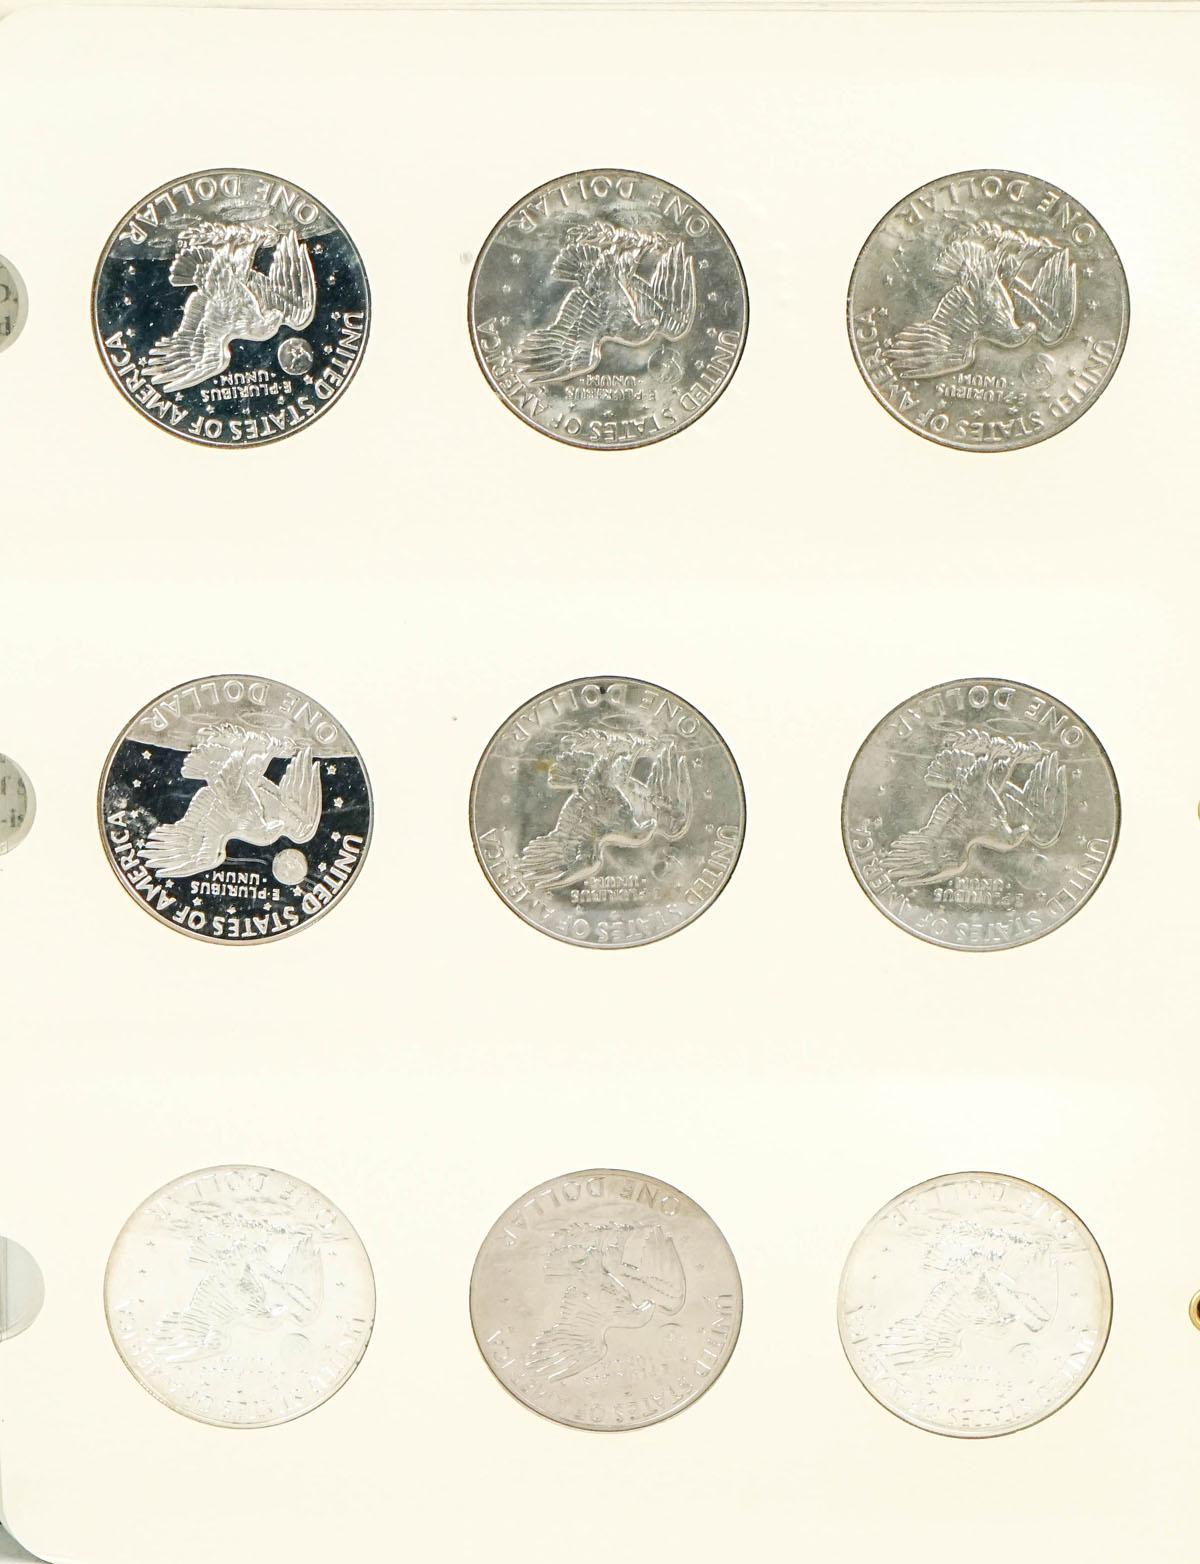 1971-1978 Eisenhower Dollars Collection Set